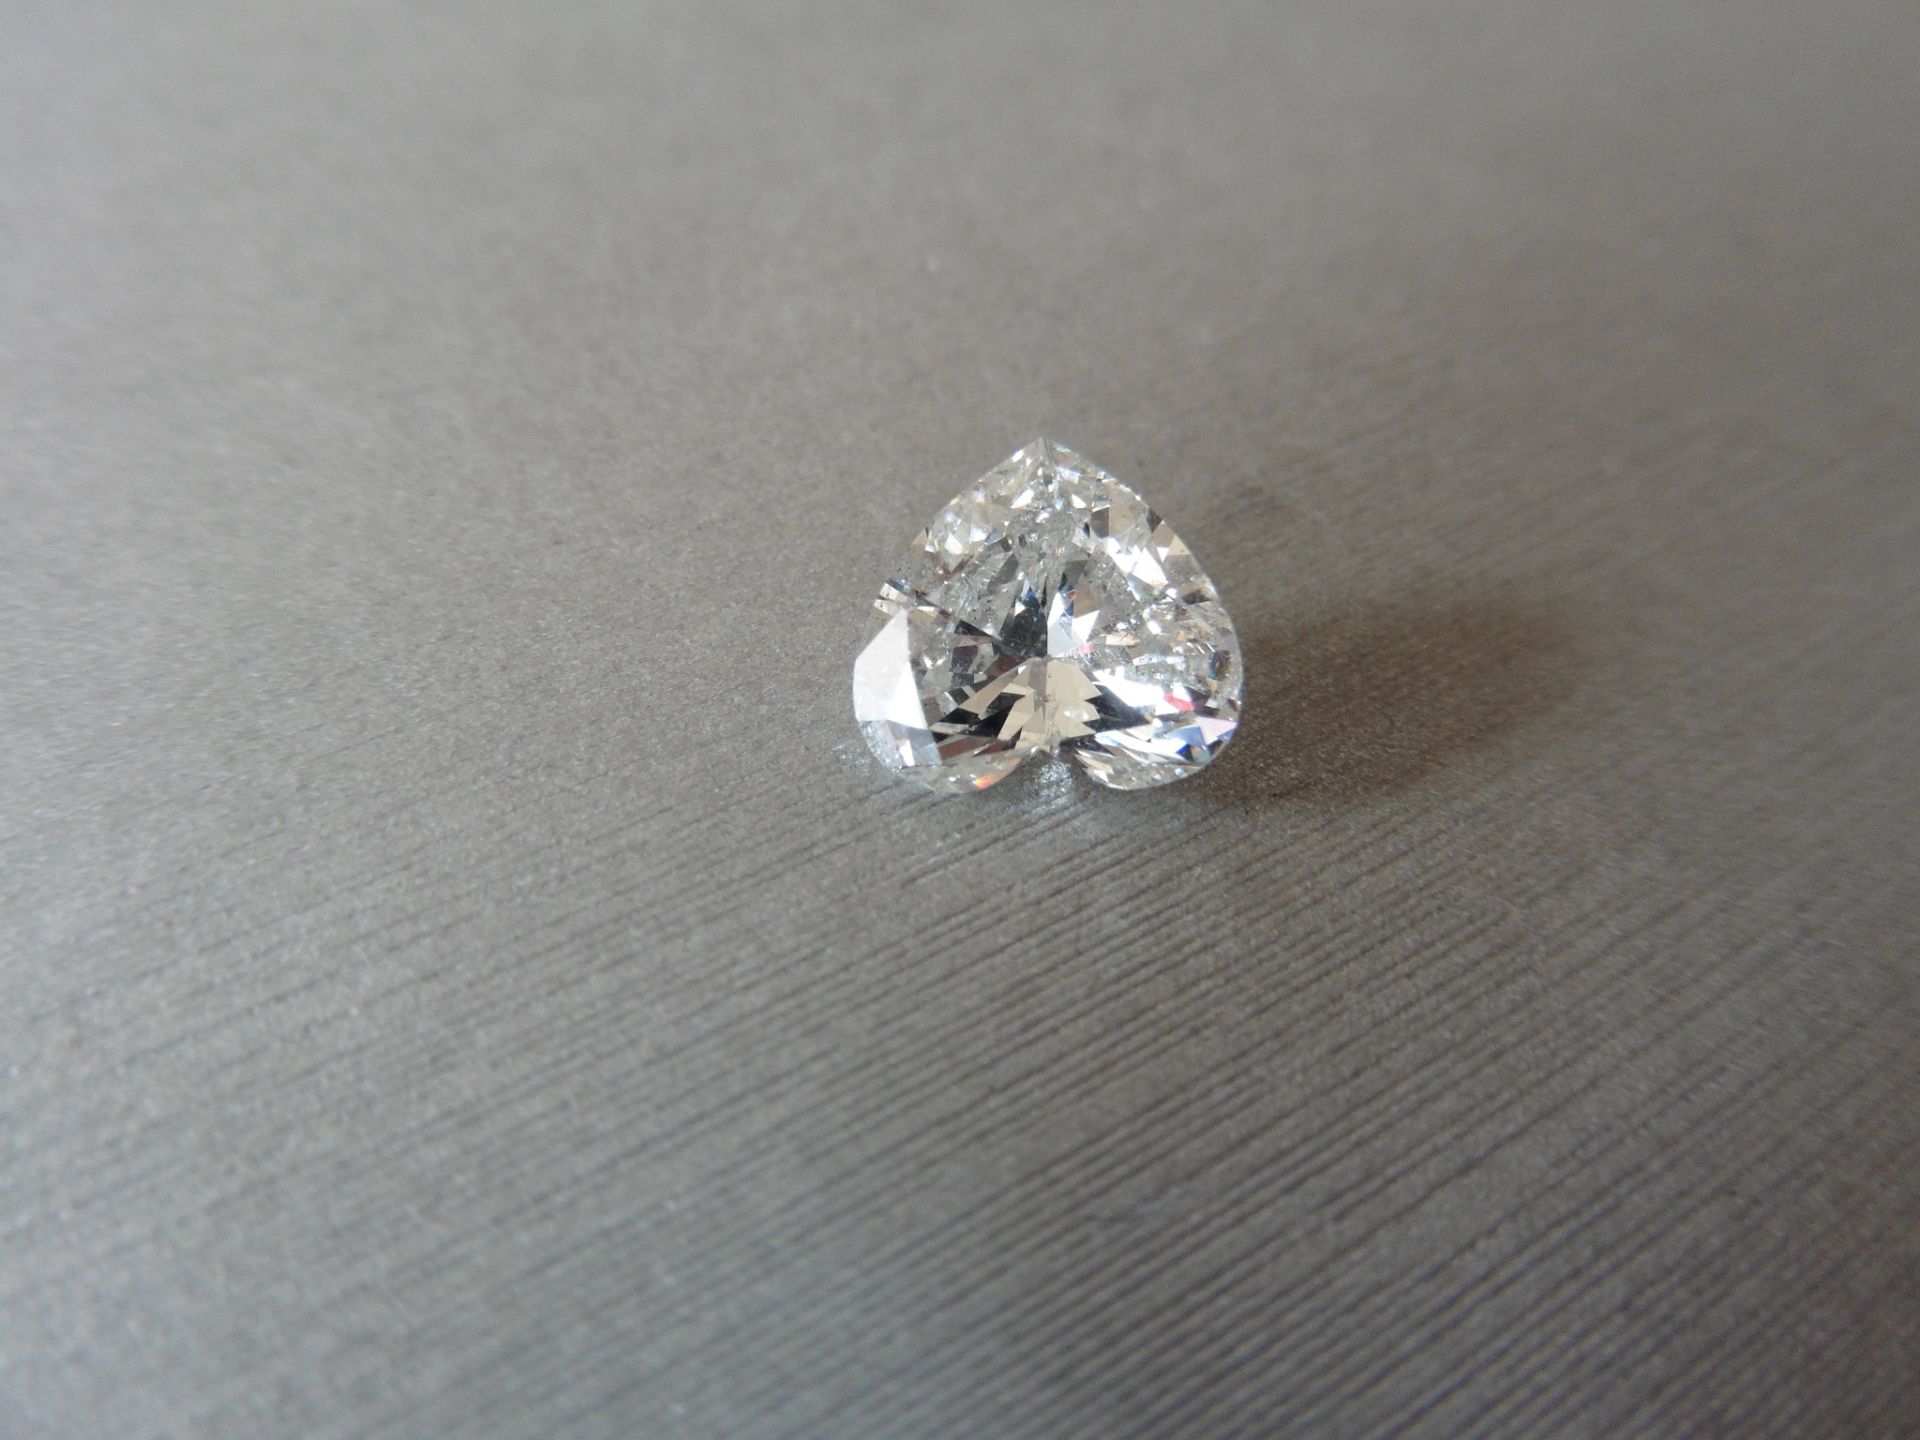 2.66ct single heart shaped diamond measurements 9.83 x 8.84 x 4.91mm. I Colour, SI2 Clarity. No